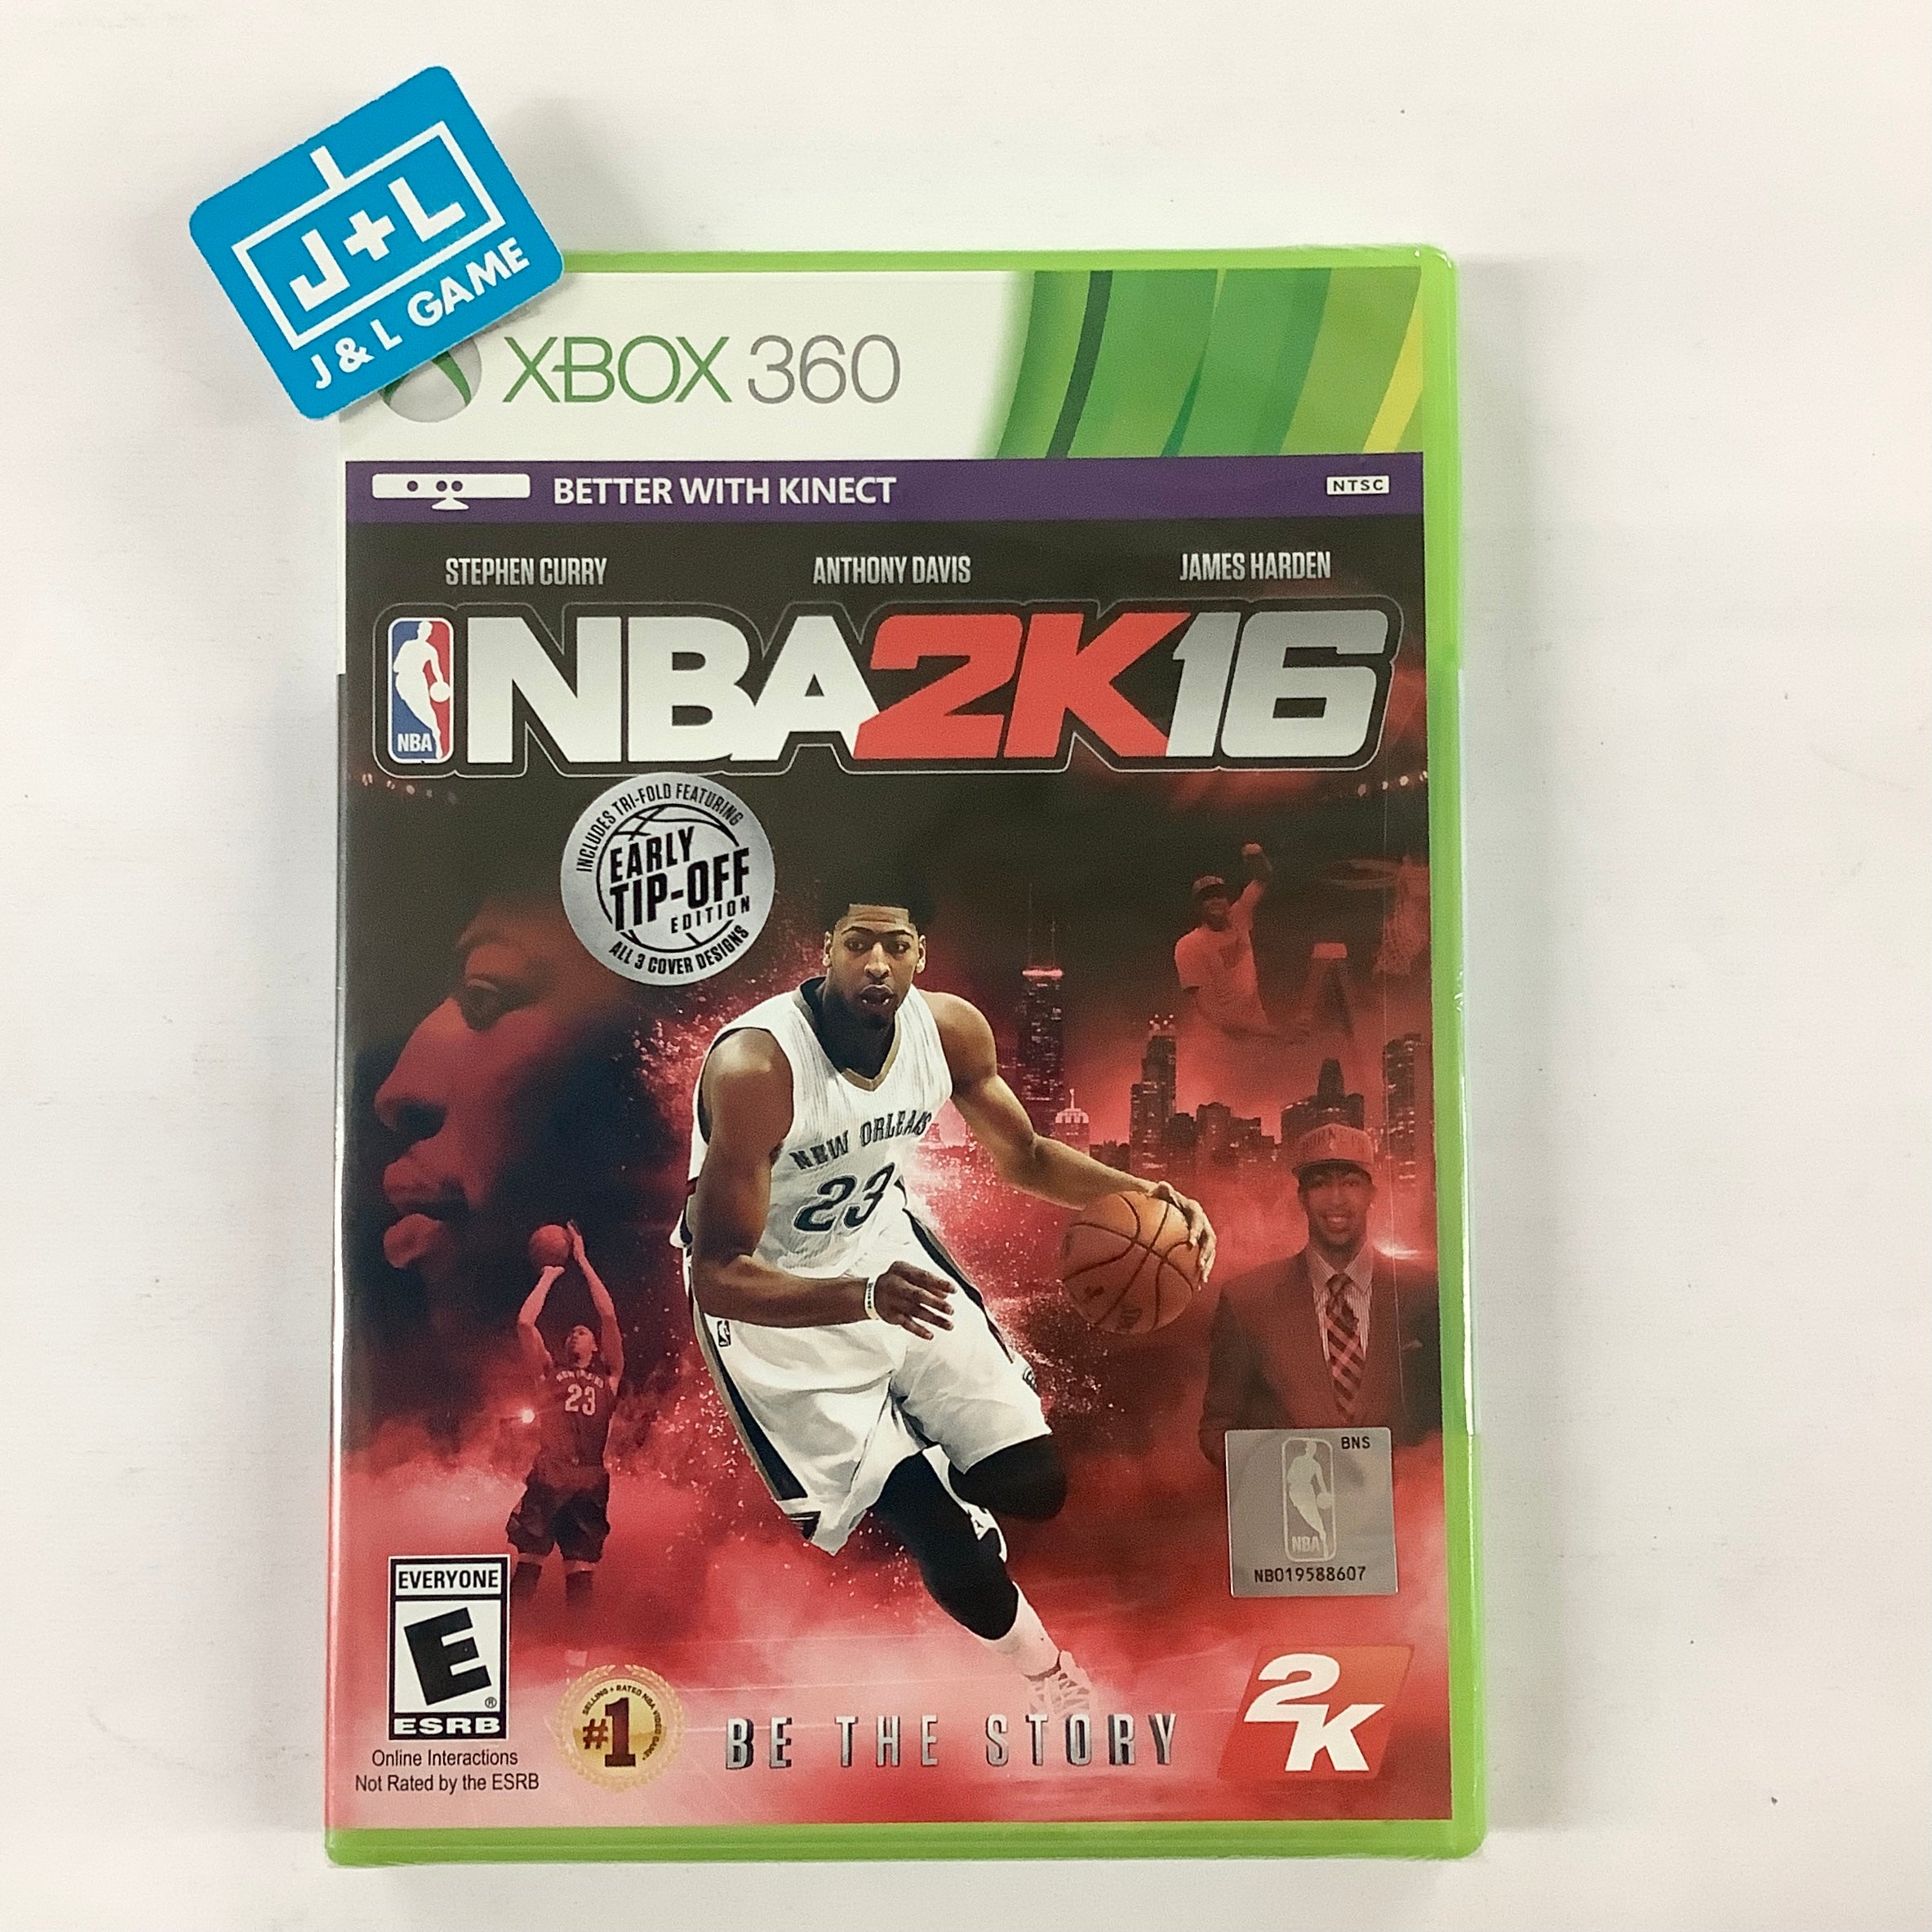 NBA 2K16 - Xbox 360 Video Games 2K Sports   